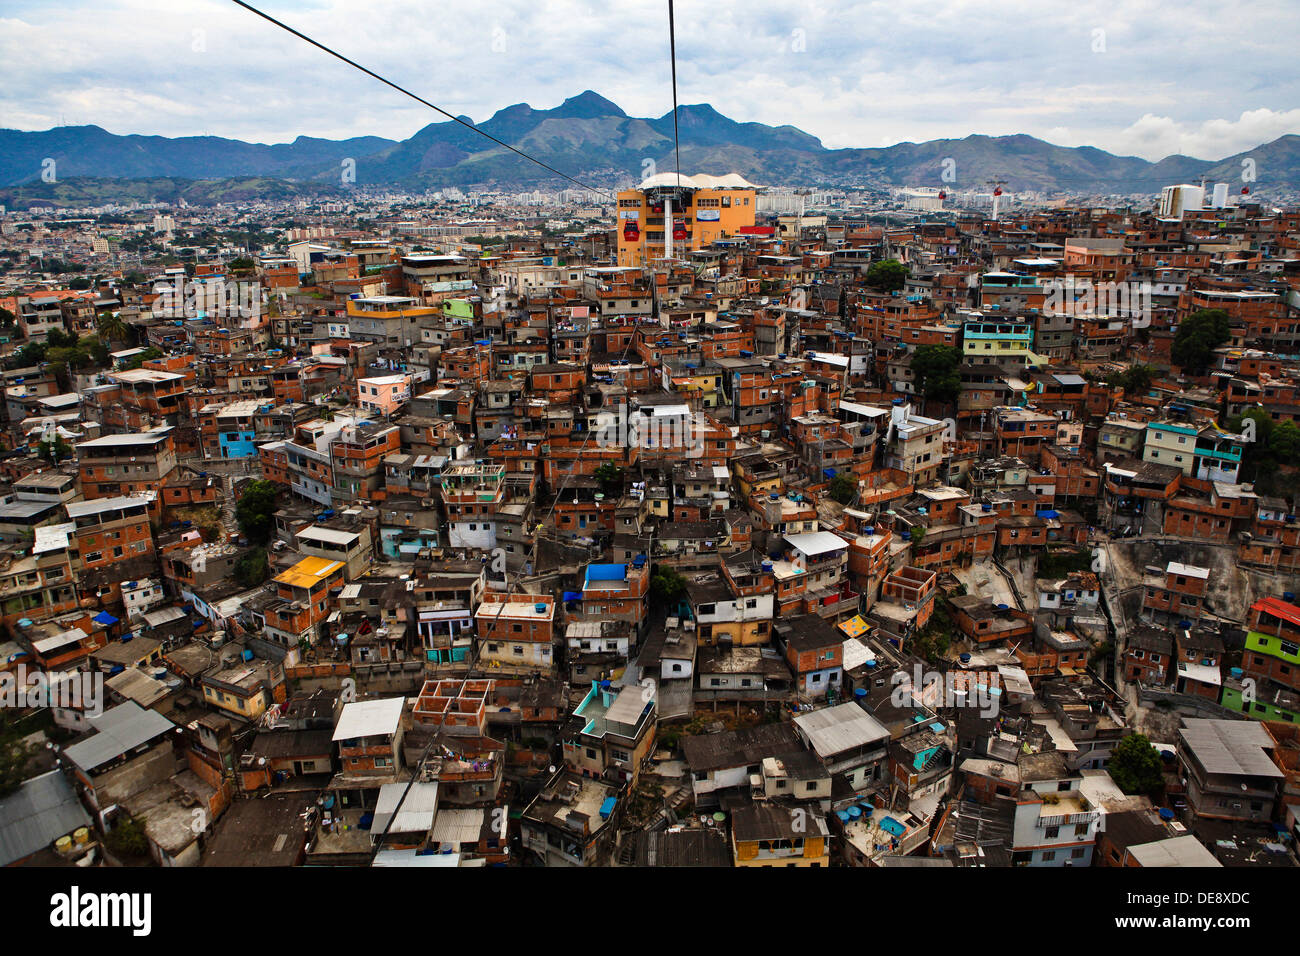 Complexo do Alemao, Rio de Janeiro favela, Brazil Gondola lift built by the Leitner-Poma group Stock Photo